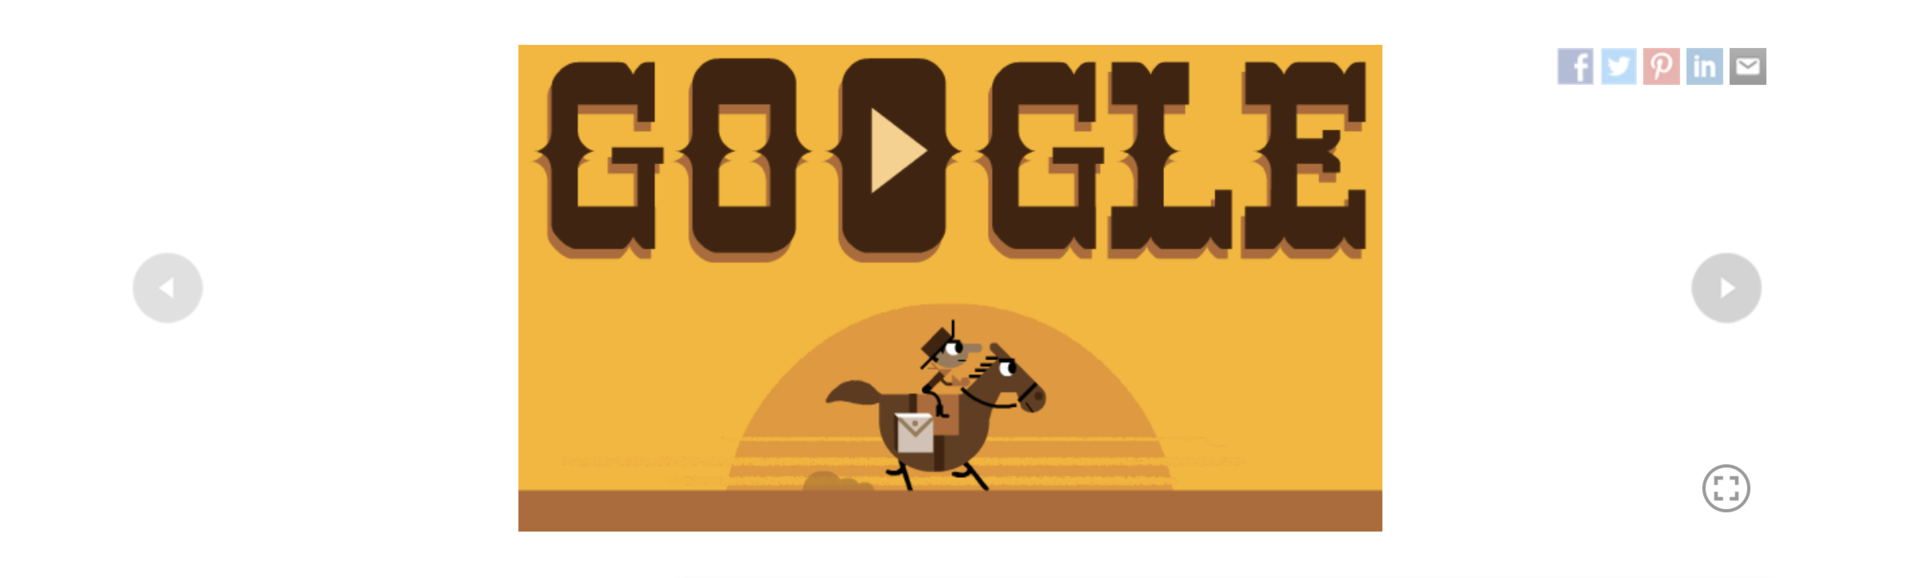 google doodle pony express